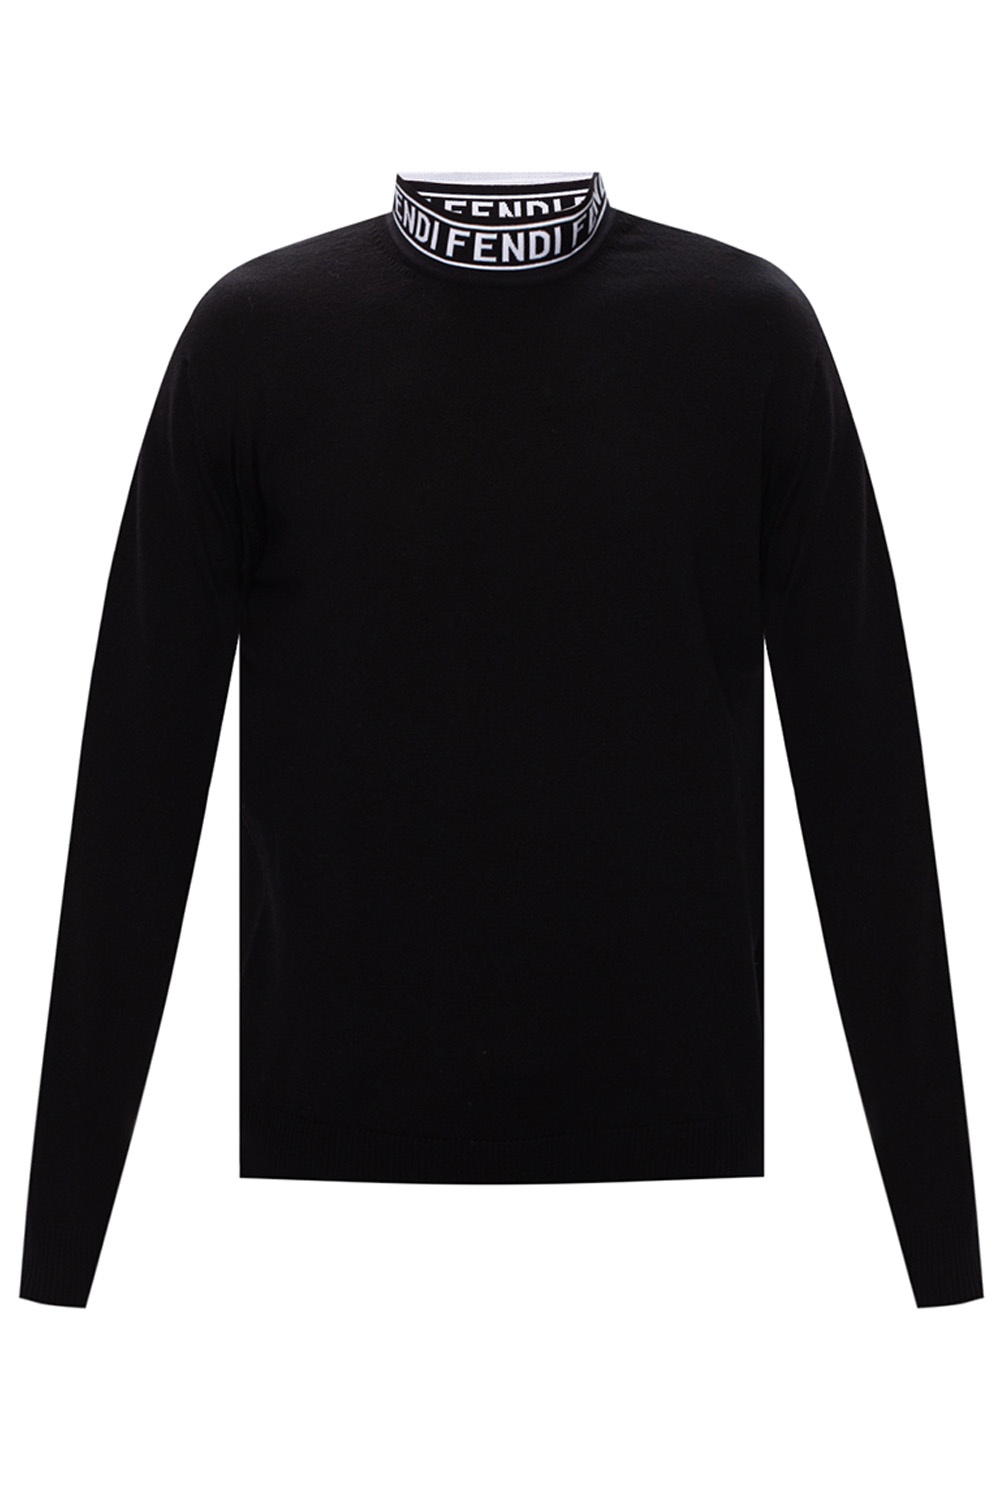 Turtleneck sweater with logo Fendi 